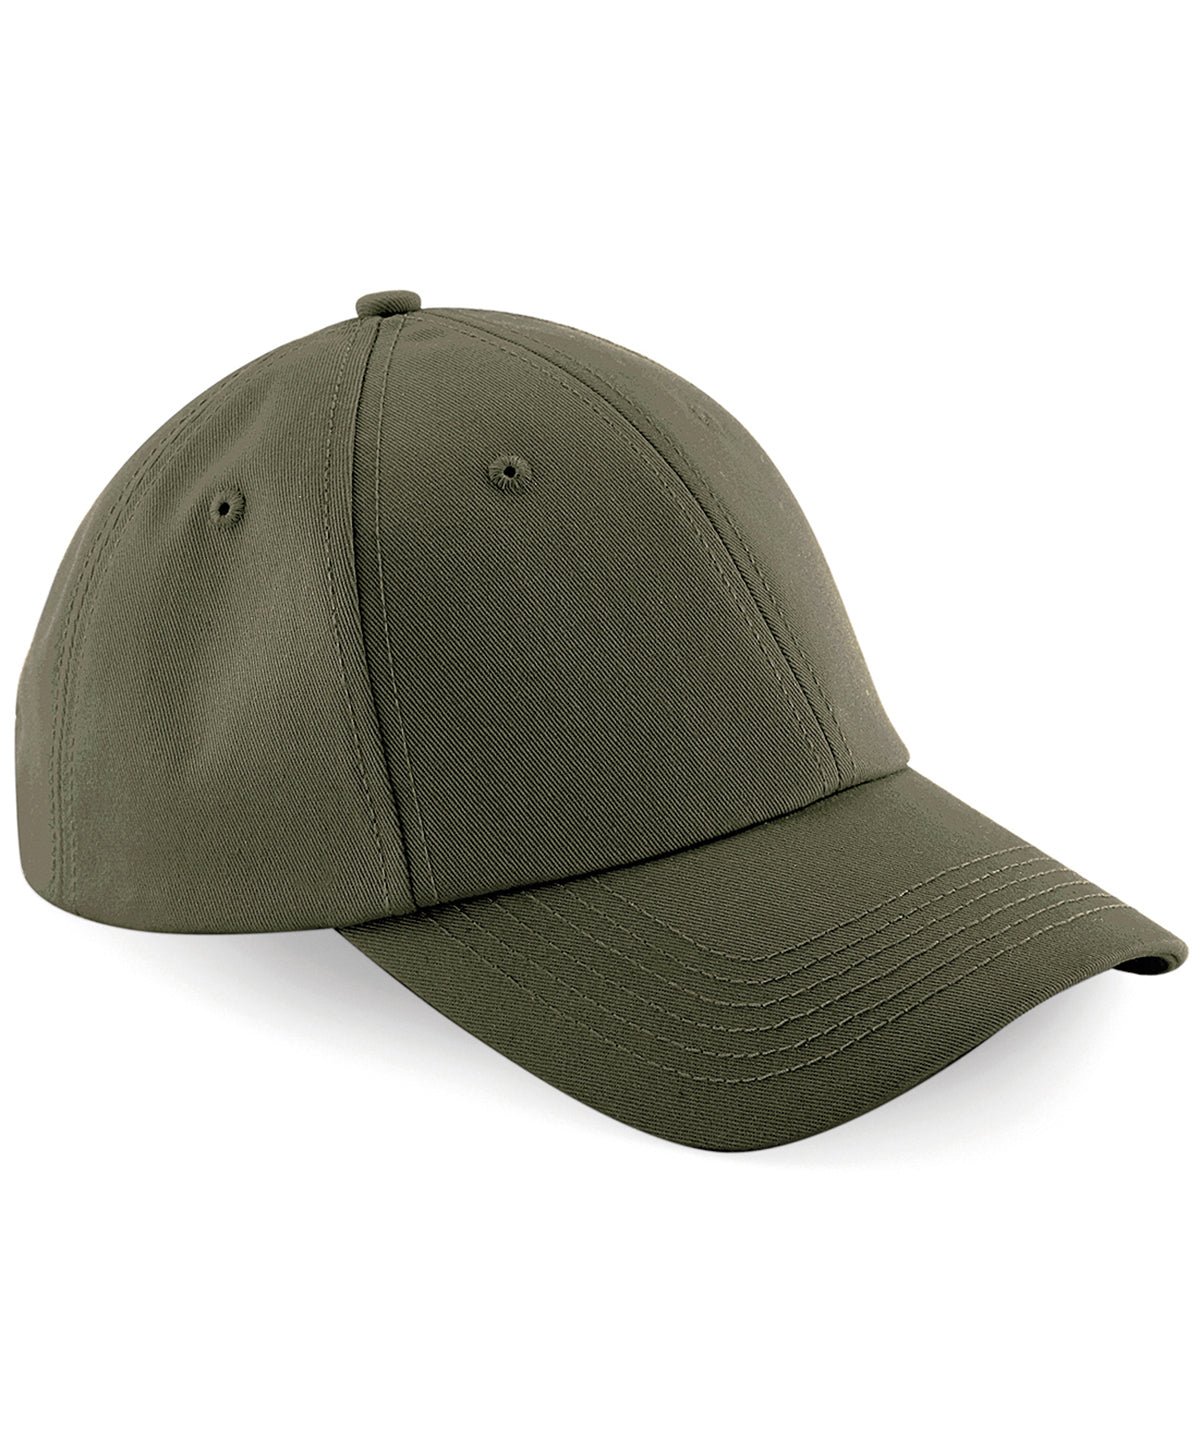 Personalised Caps - Dark Green Beechfield Authentic baseball cap